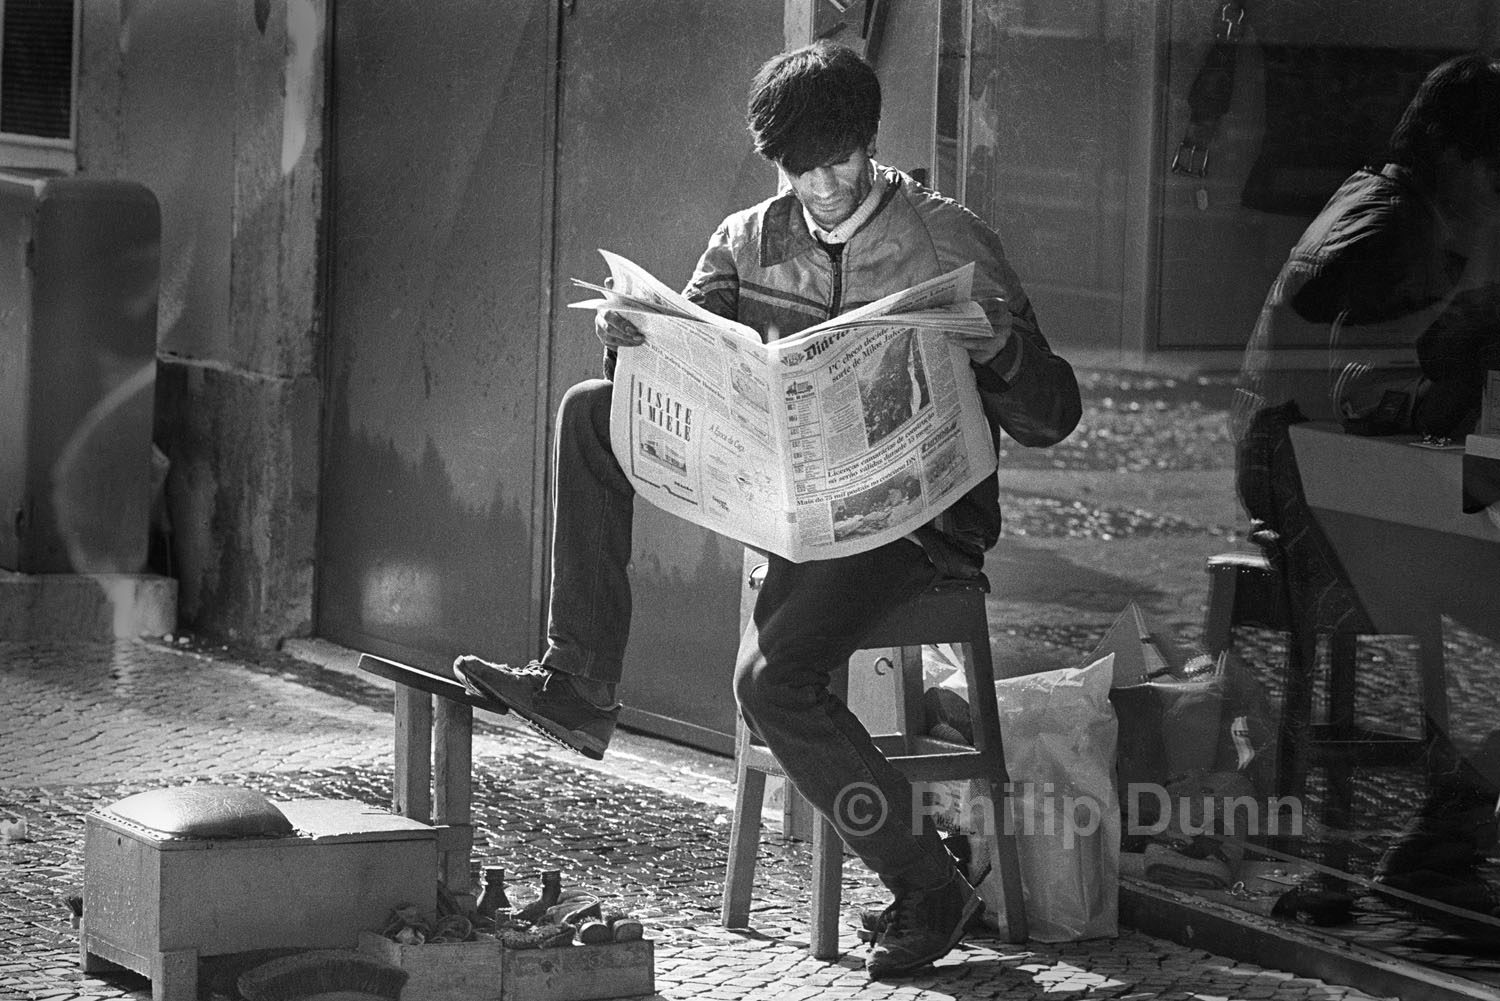 Shoe shine man reading paper, Portugal. black and white image